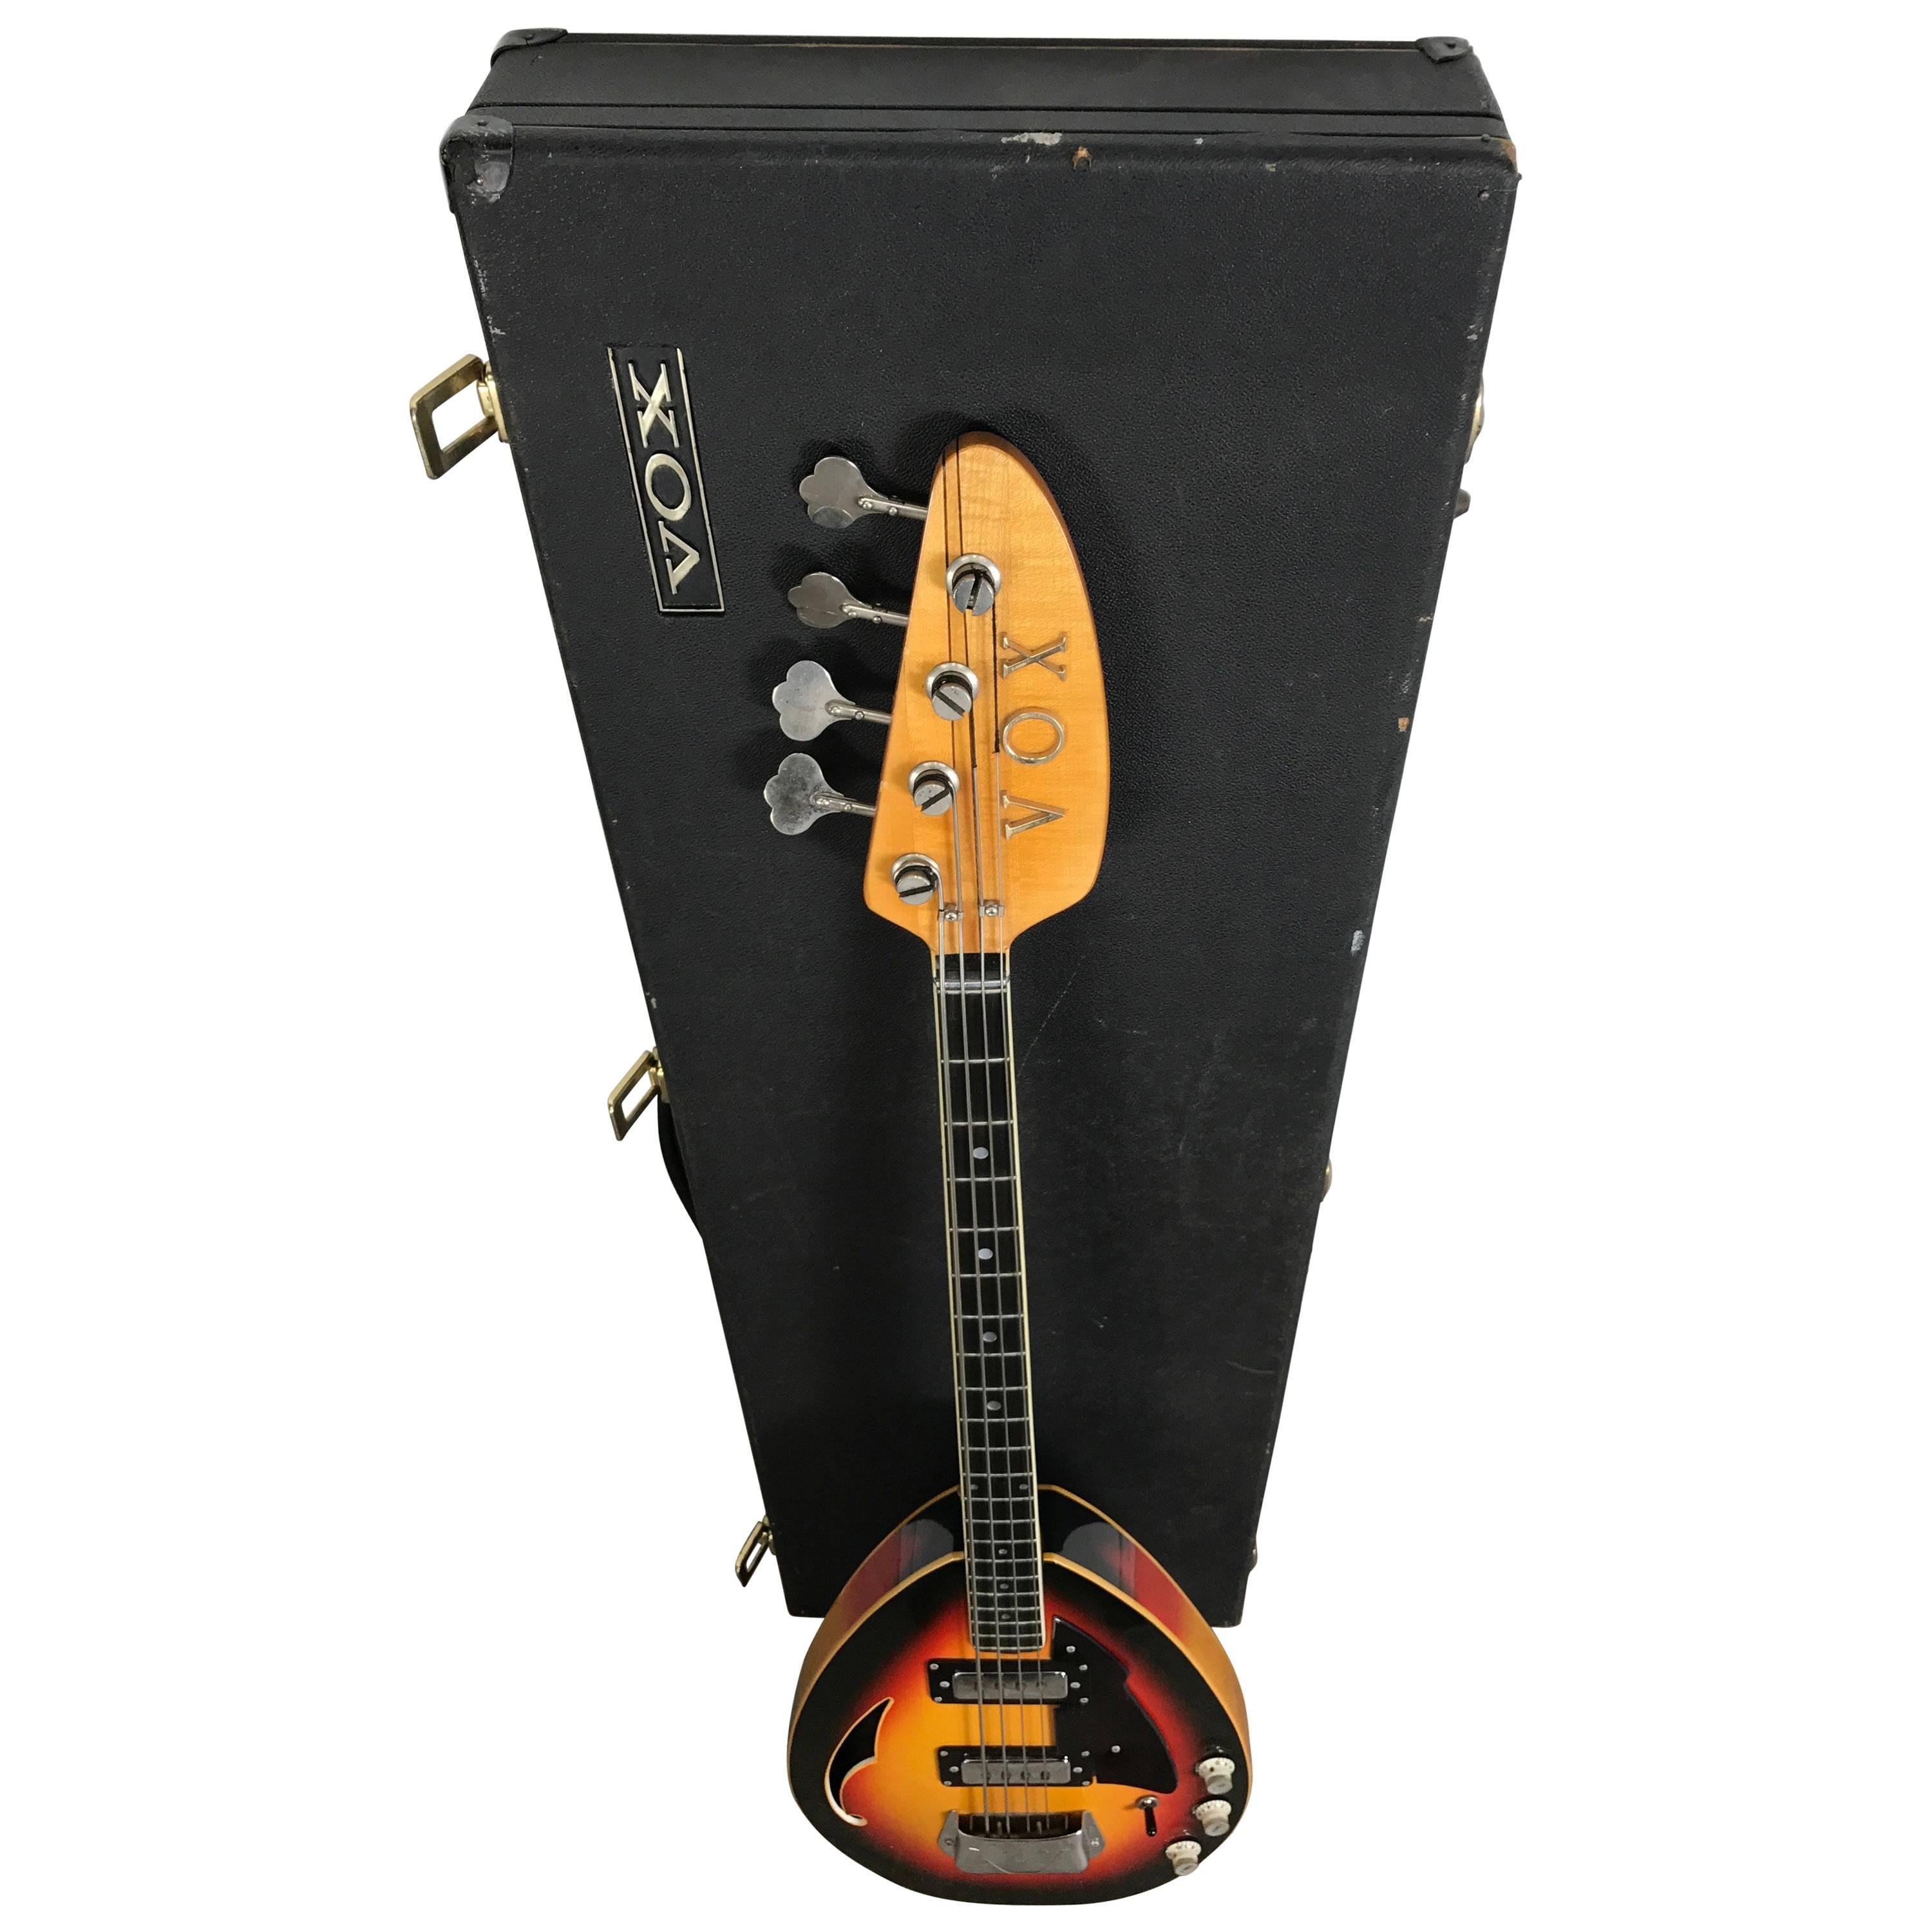 Rare 1968 Vox Teardrop Bass Guitar V284 Stinger IV, Made in Italy